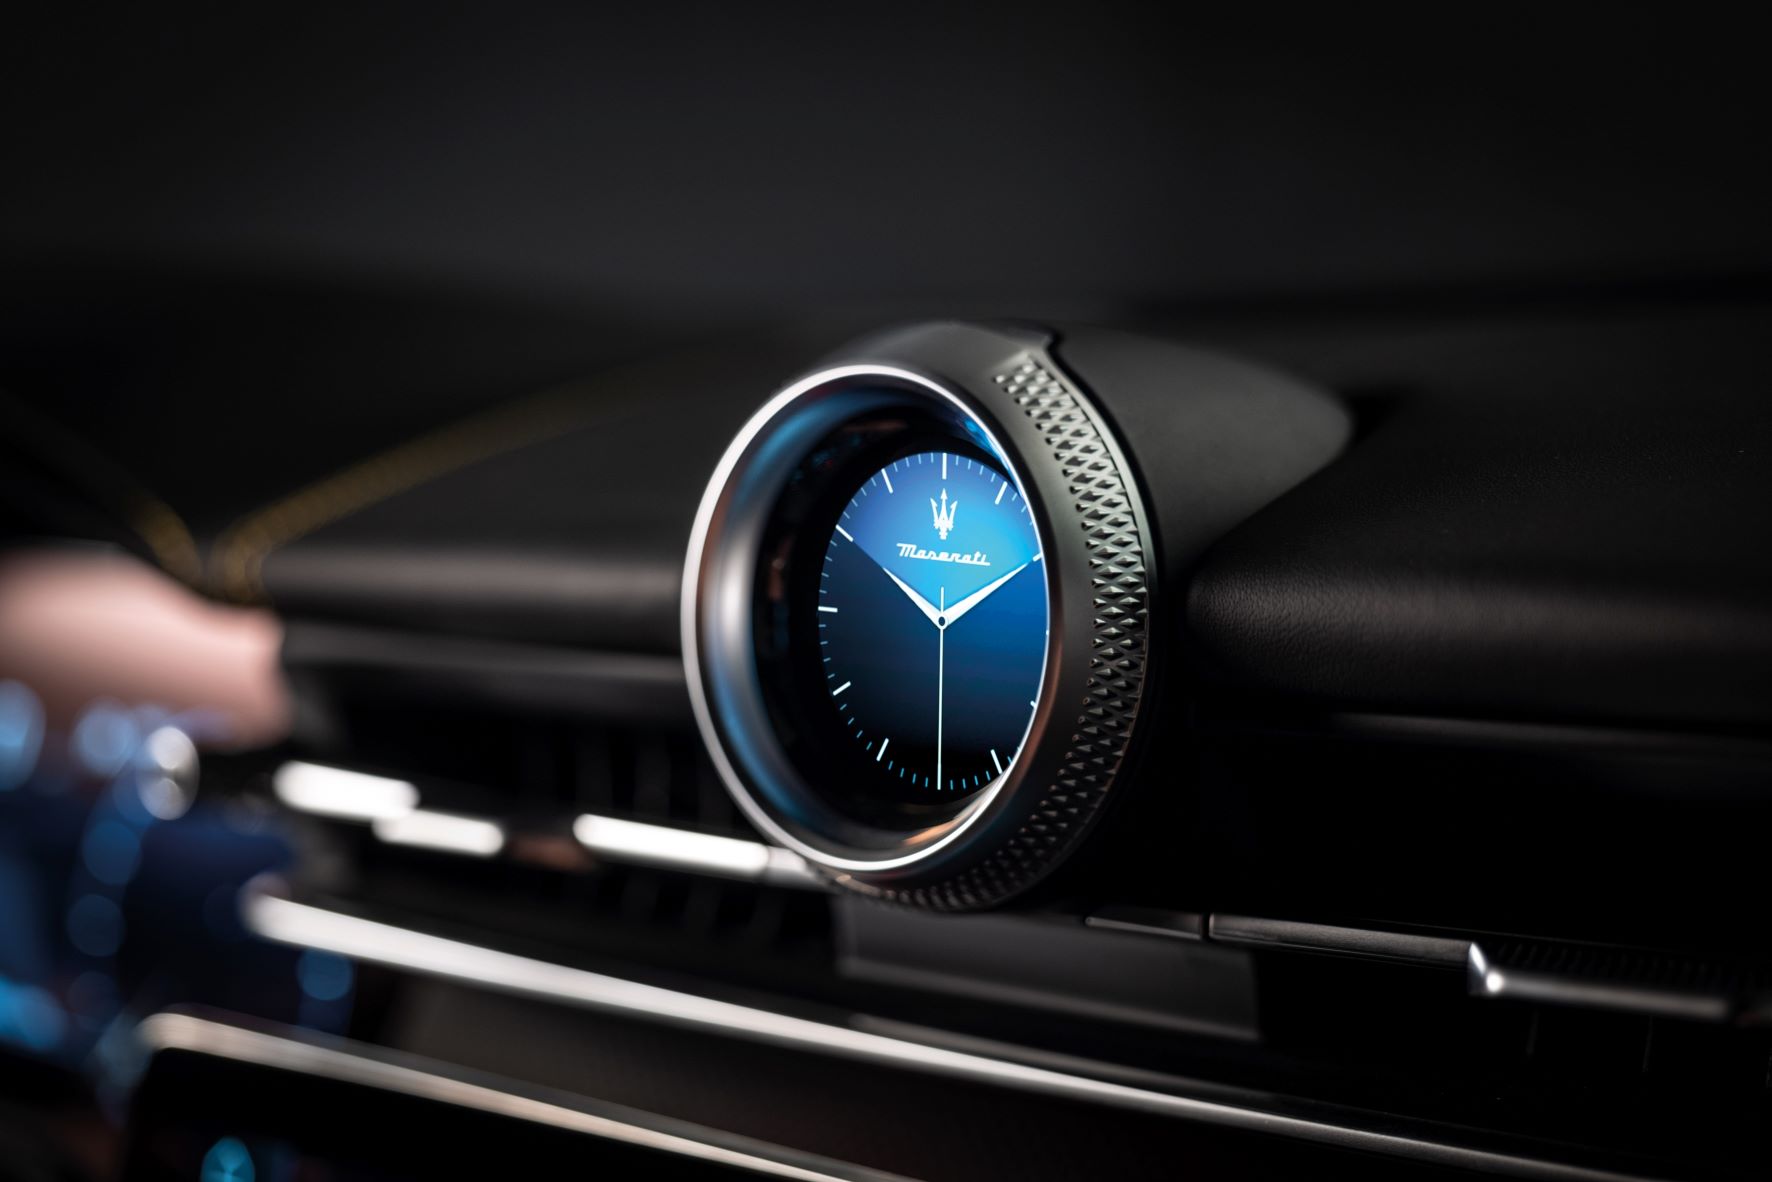 A Maserati analogue clock on the dashboard